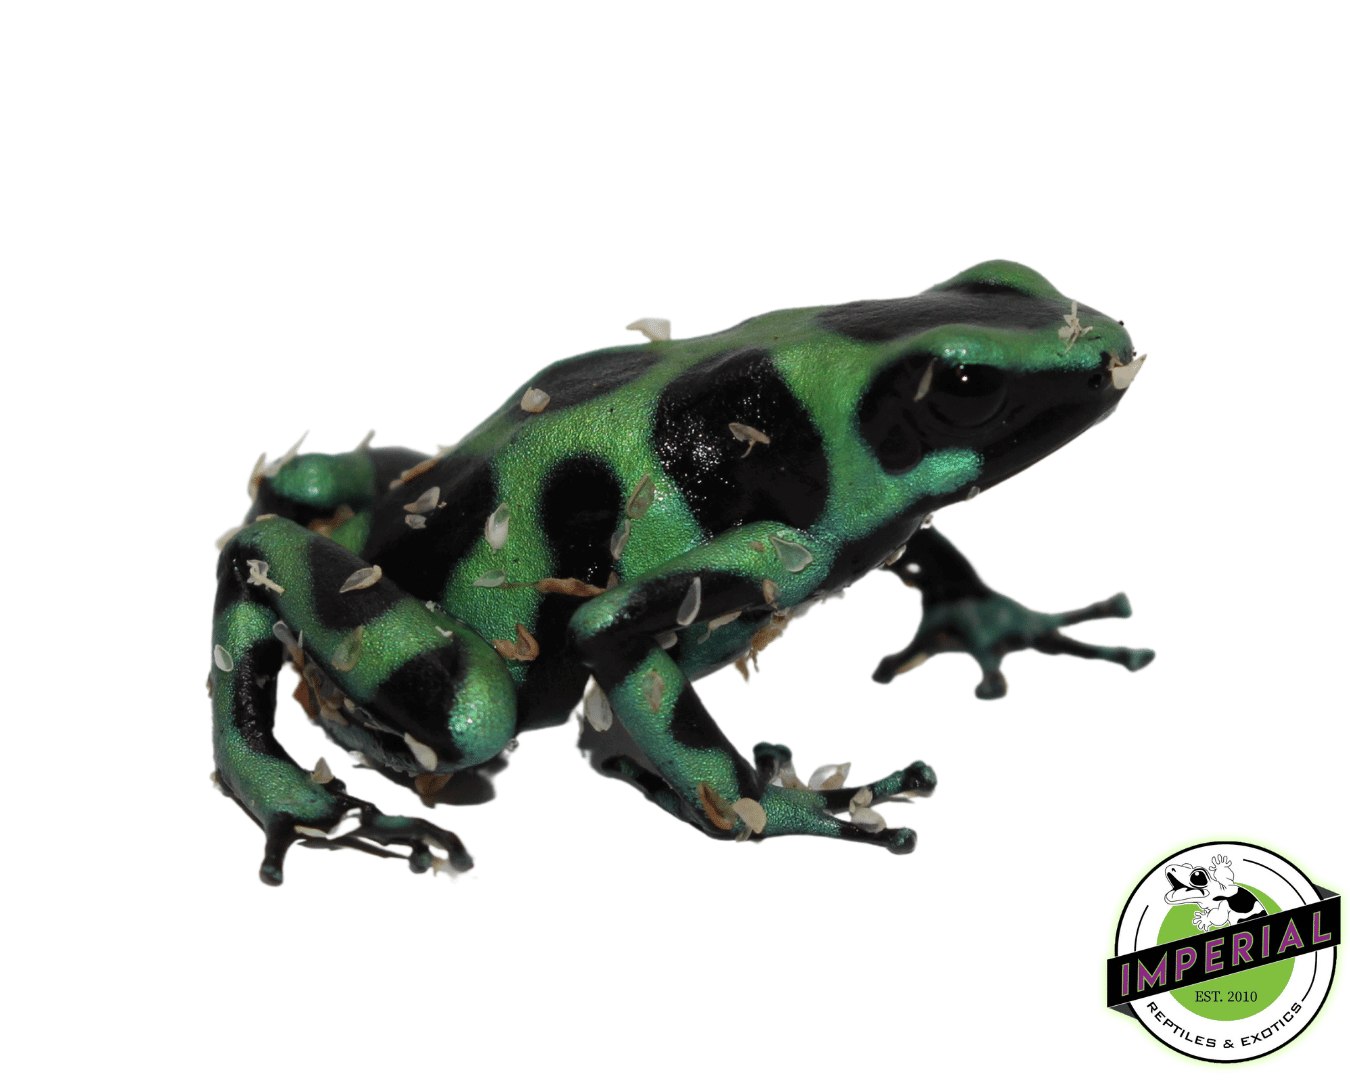 Dendrobates auratus "Green & Black" Poison Dart Frog Adult